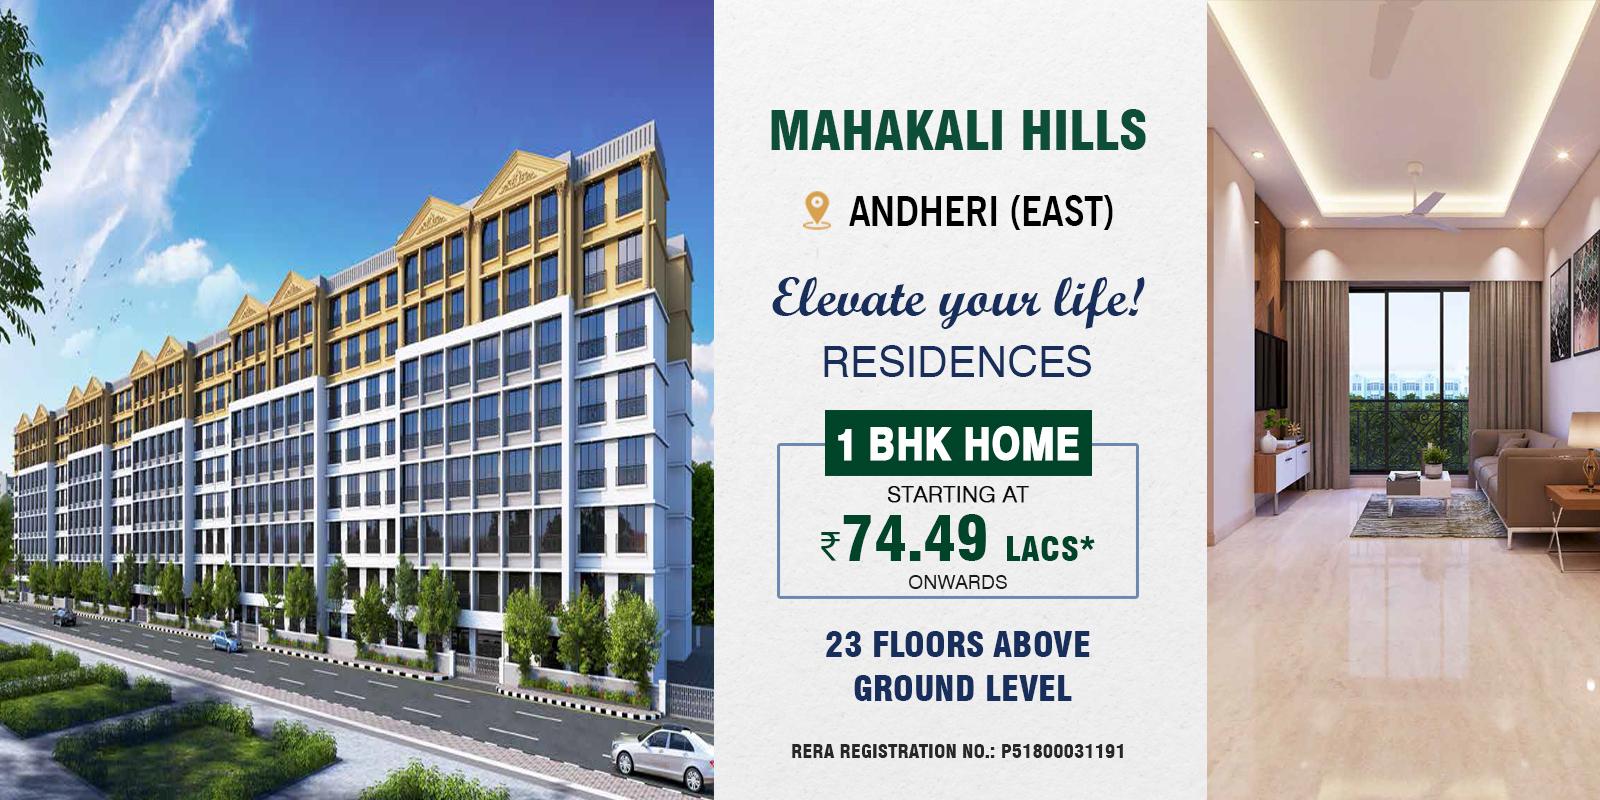 Mahakali Hills - Andheri (East) 1 BHK starting ₹74.49 Lacs